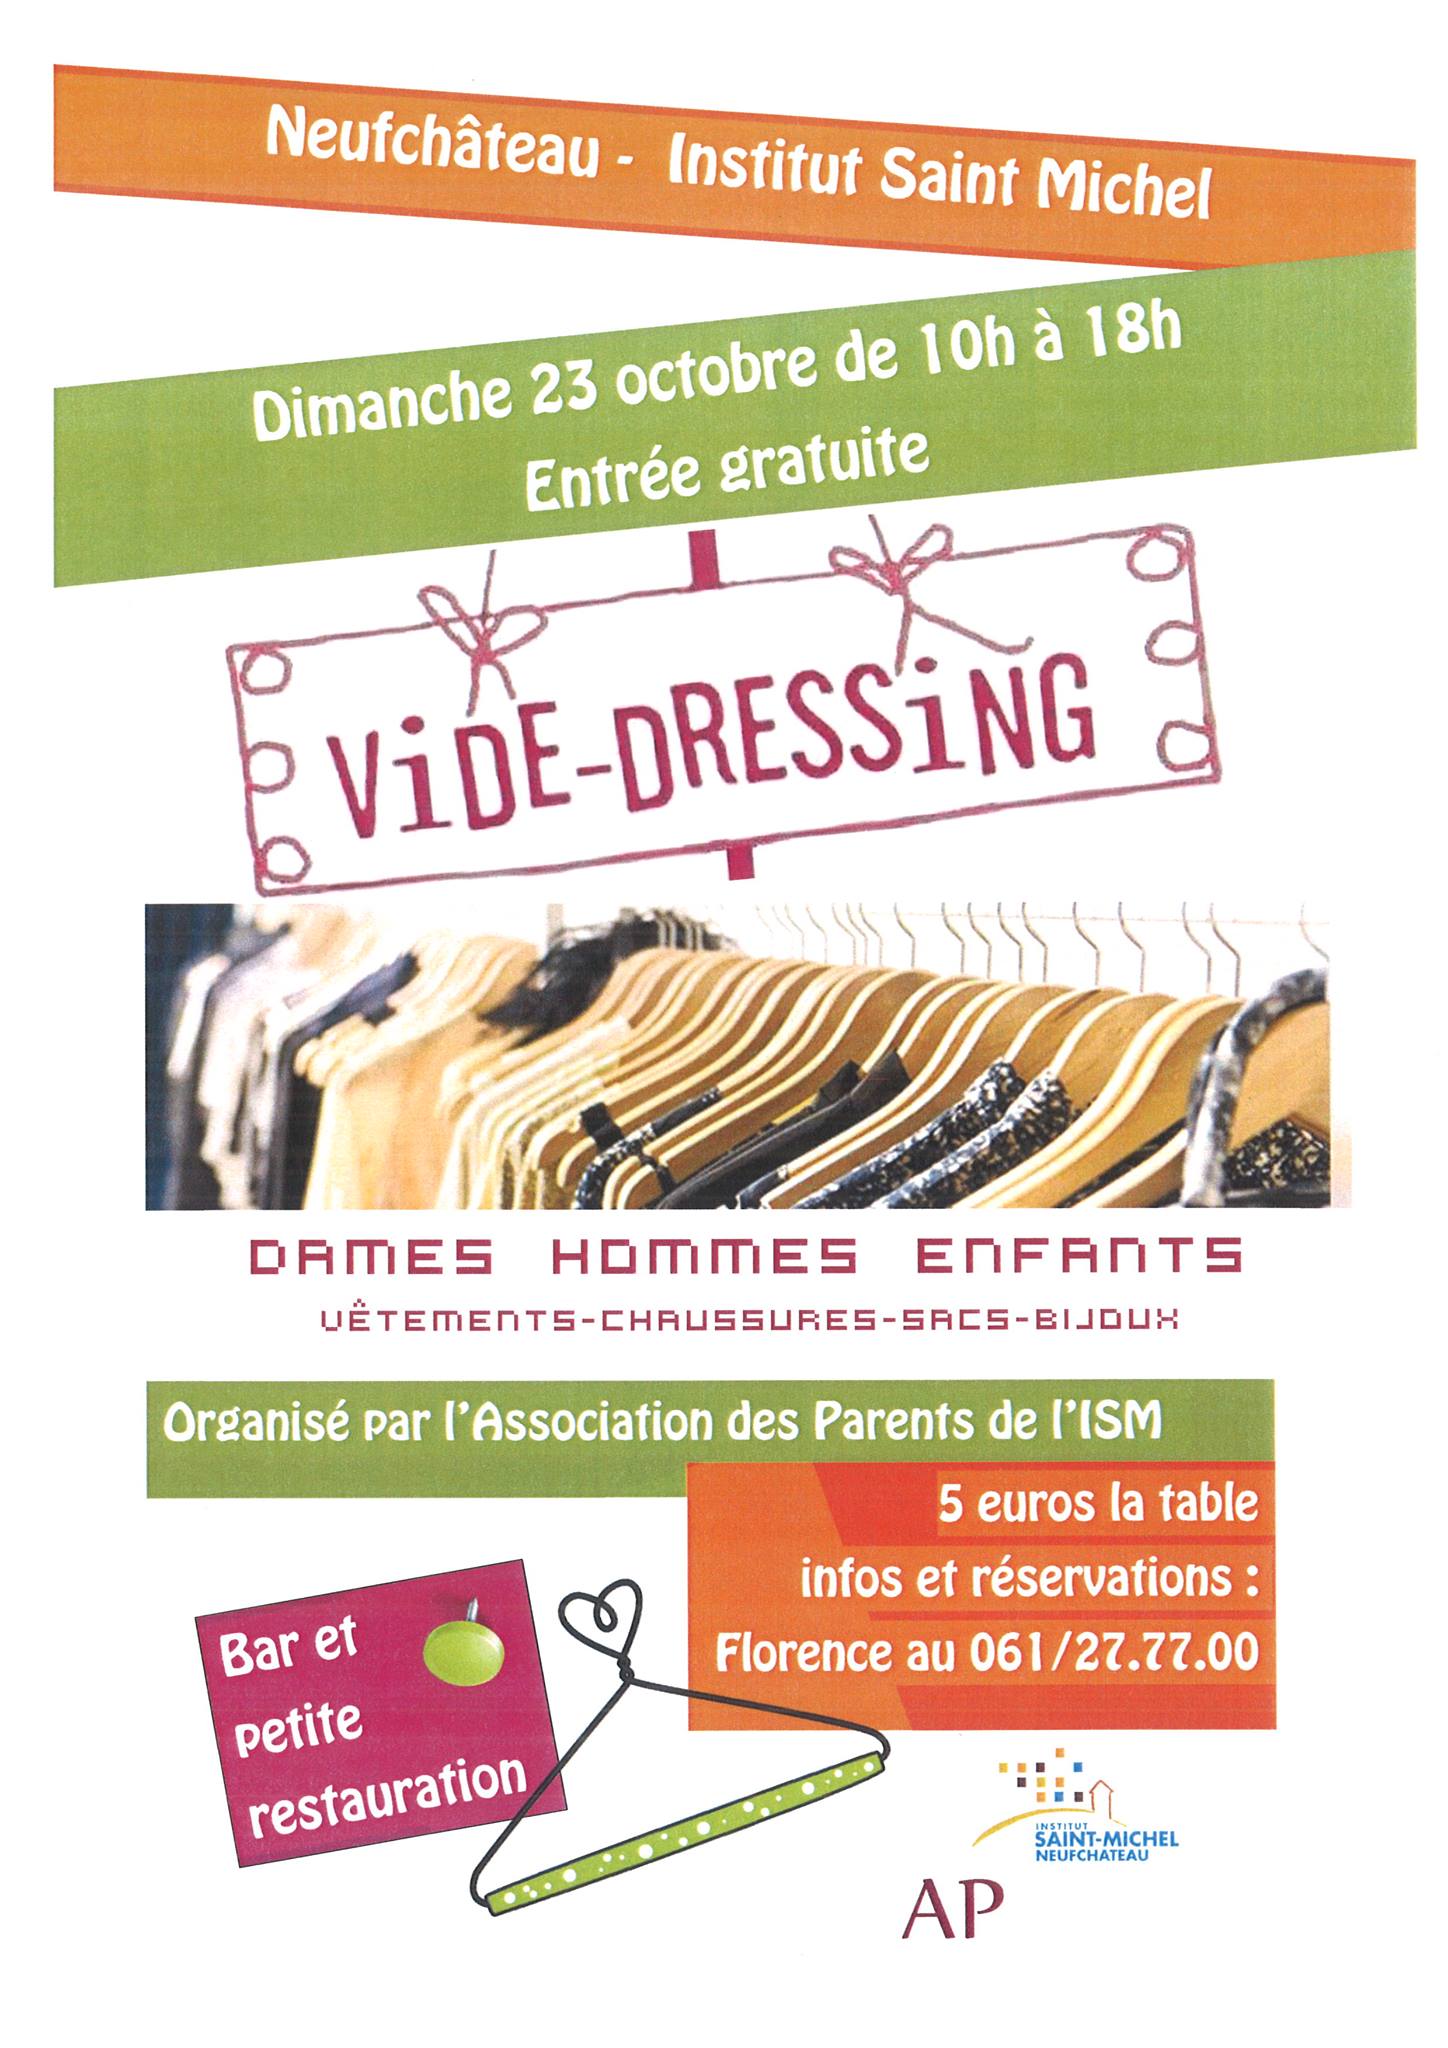 Neufchateau : vide-dressing à l’Institut Saint Michel